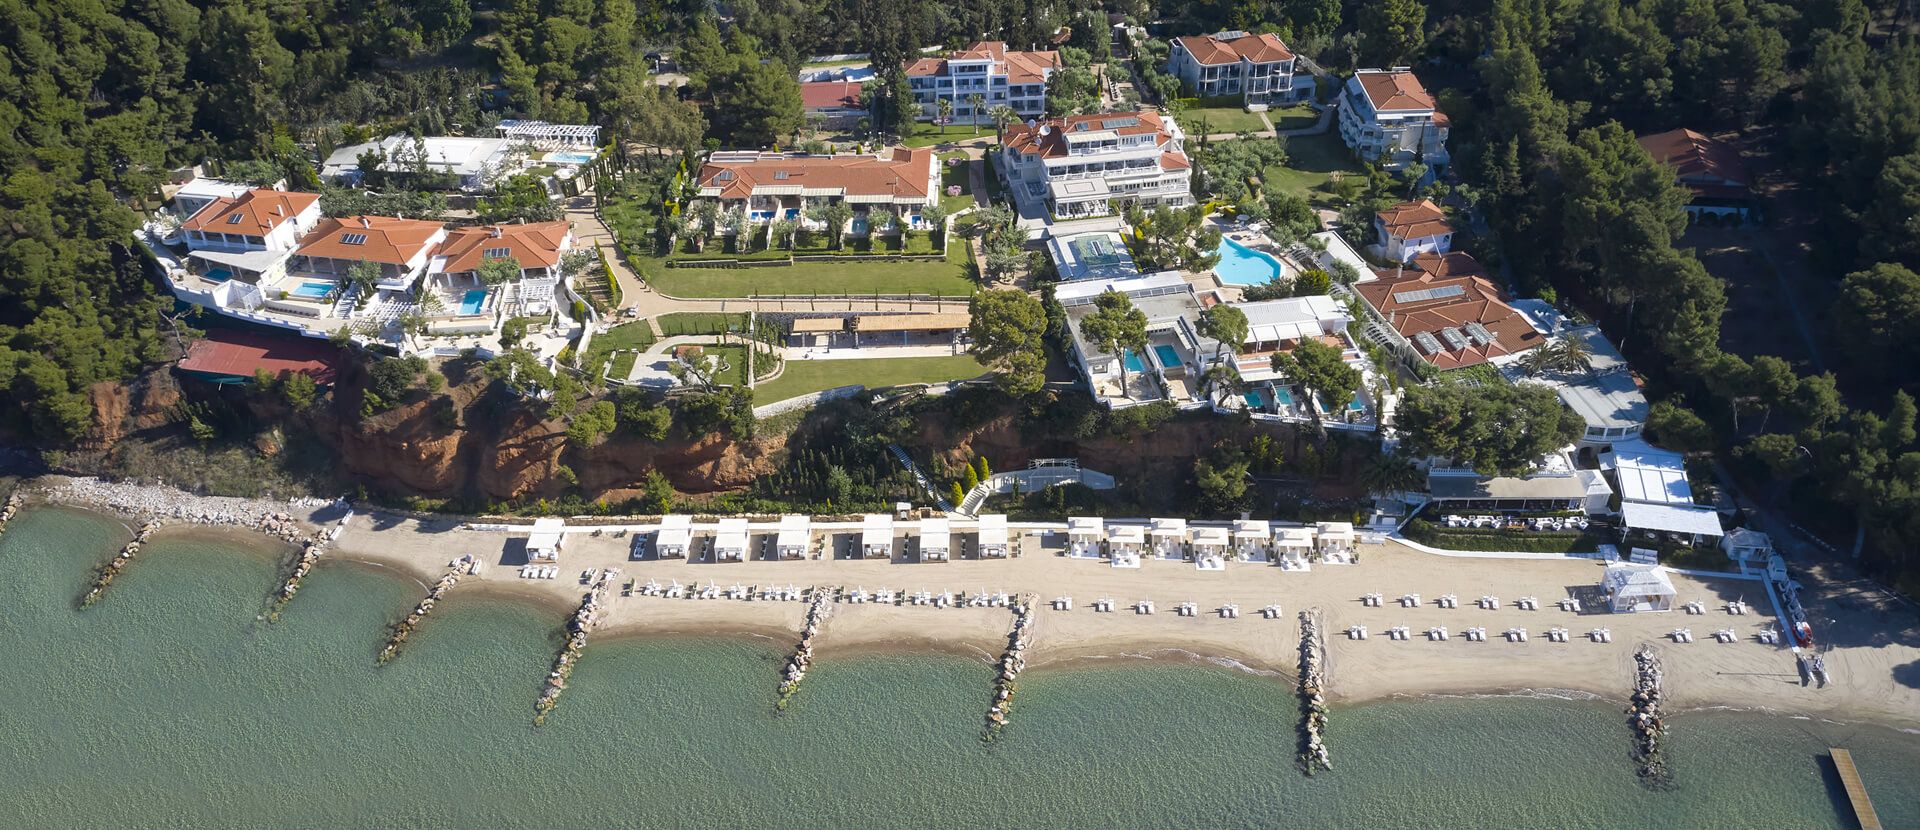 Danai Beach Resort & Villas, Halkidiki